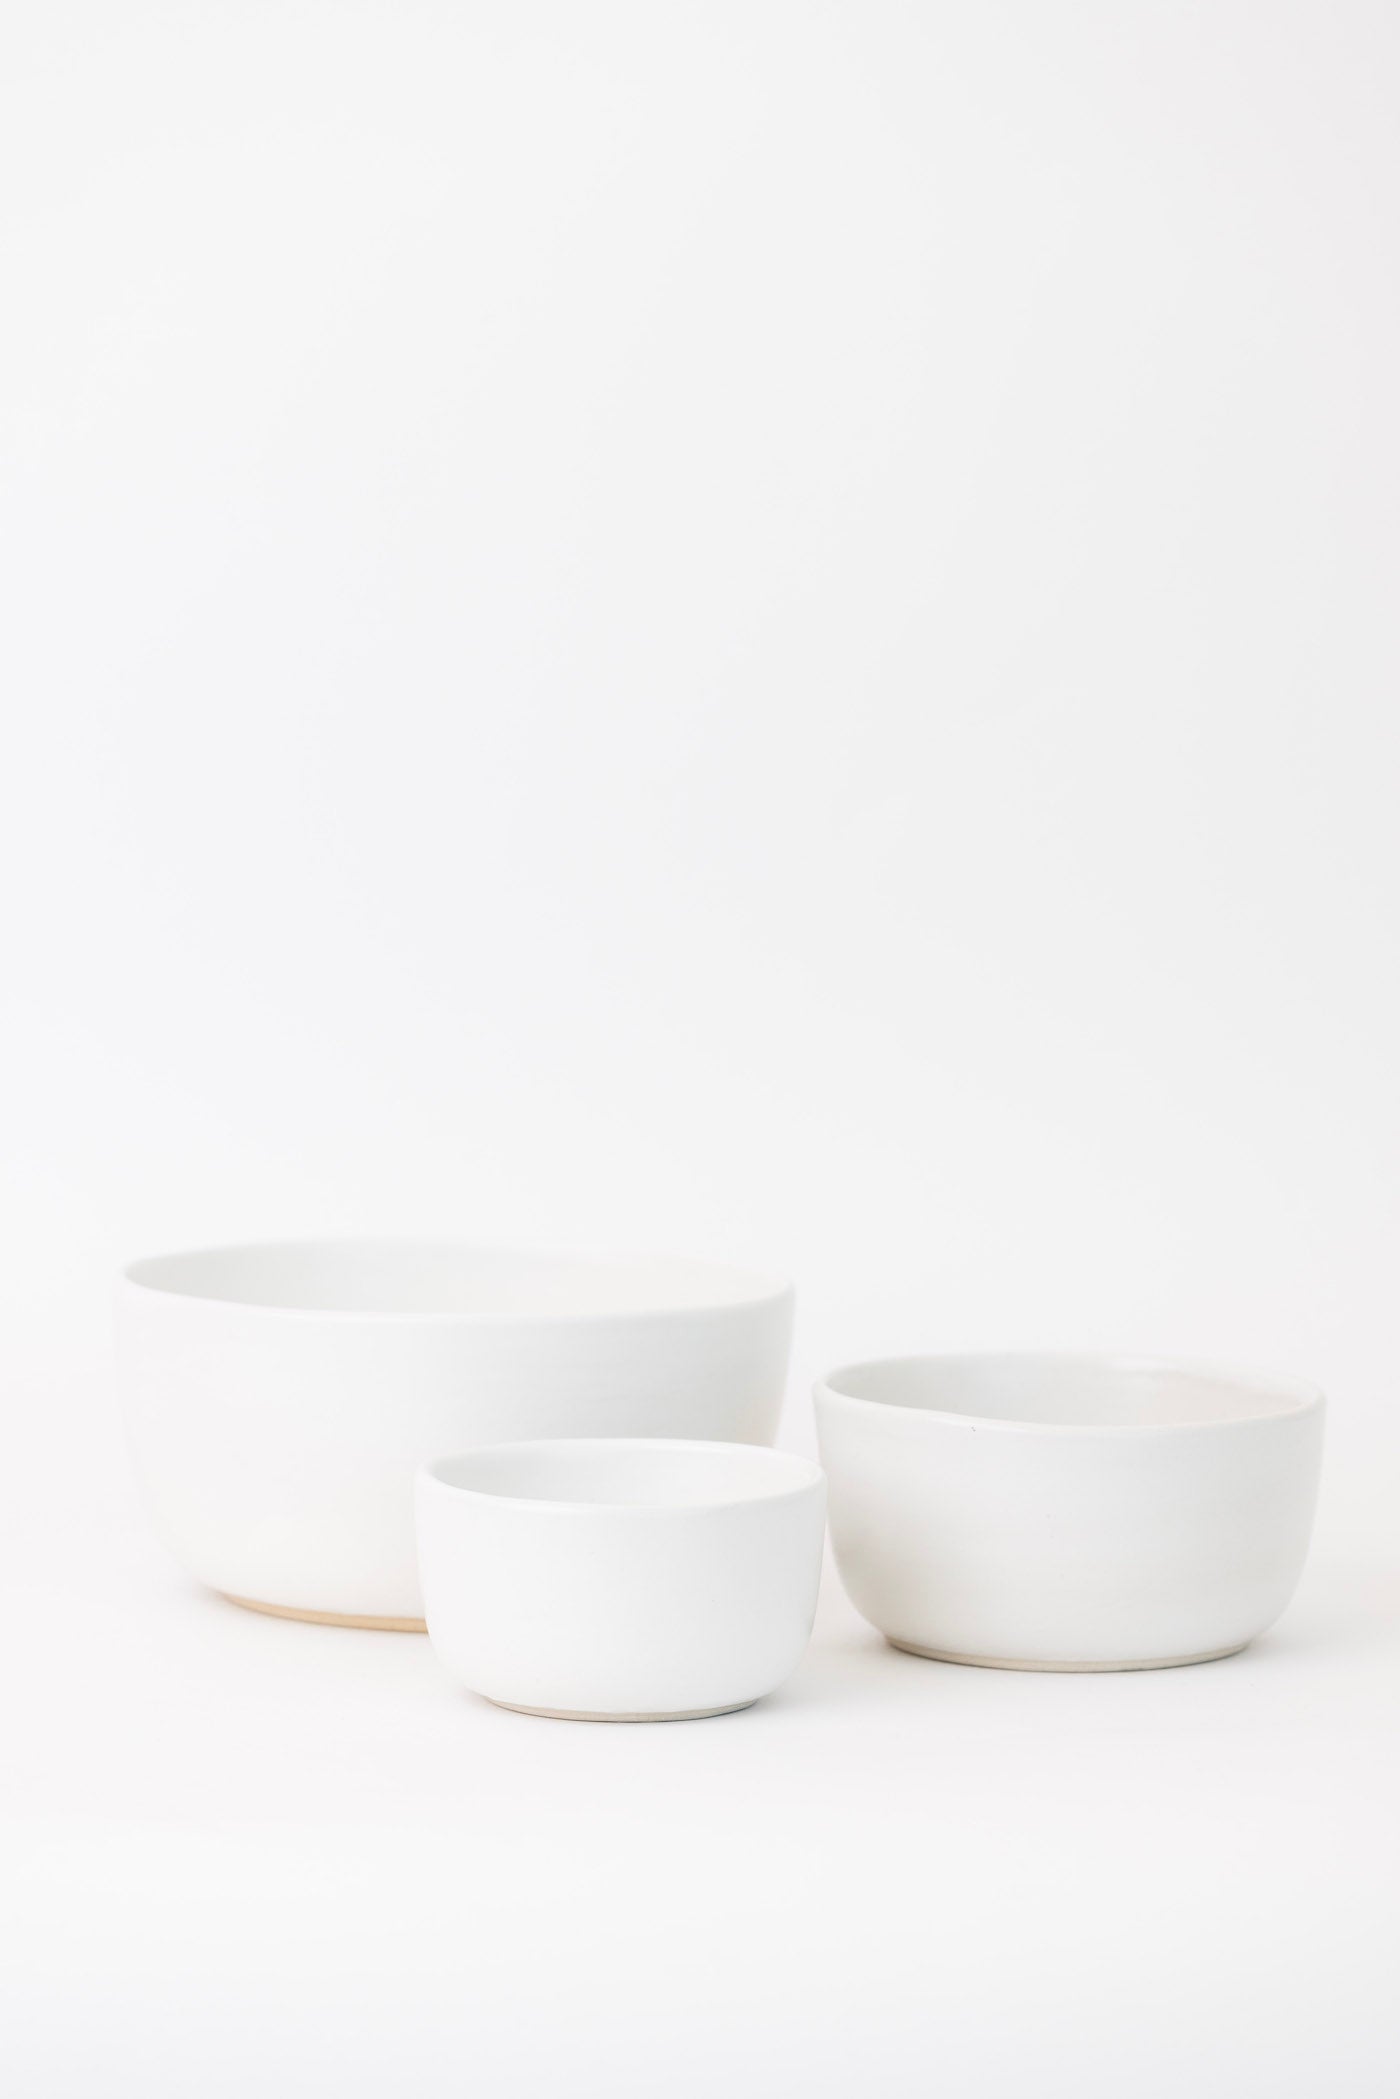 Wallace Nesting Bowls - Matte White - Set of 3